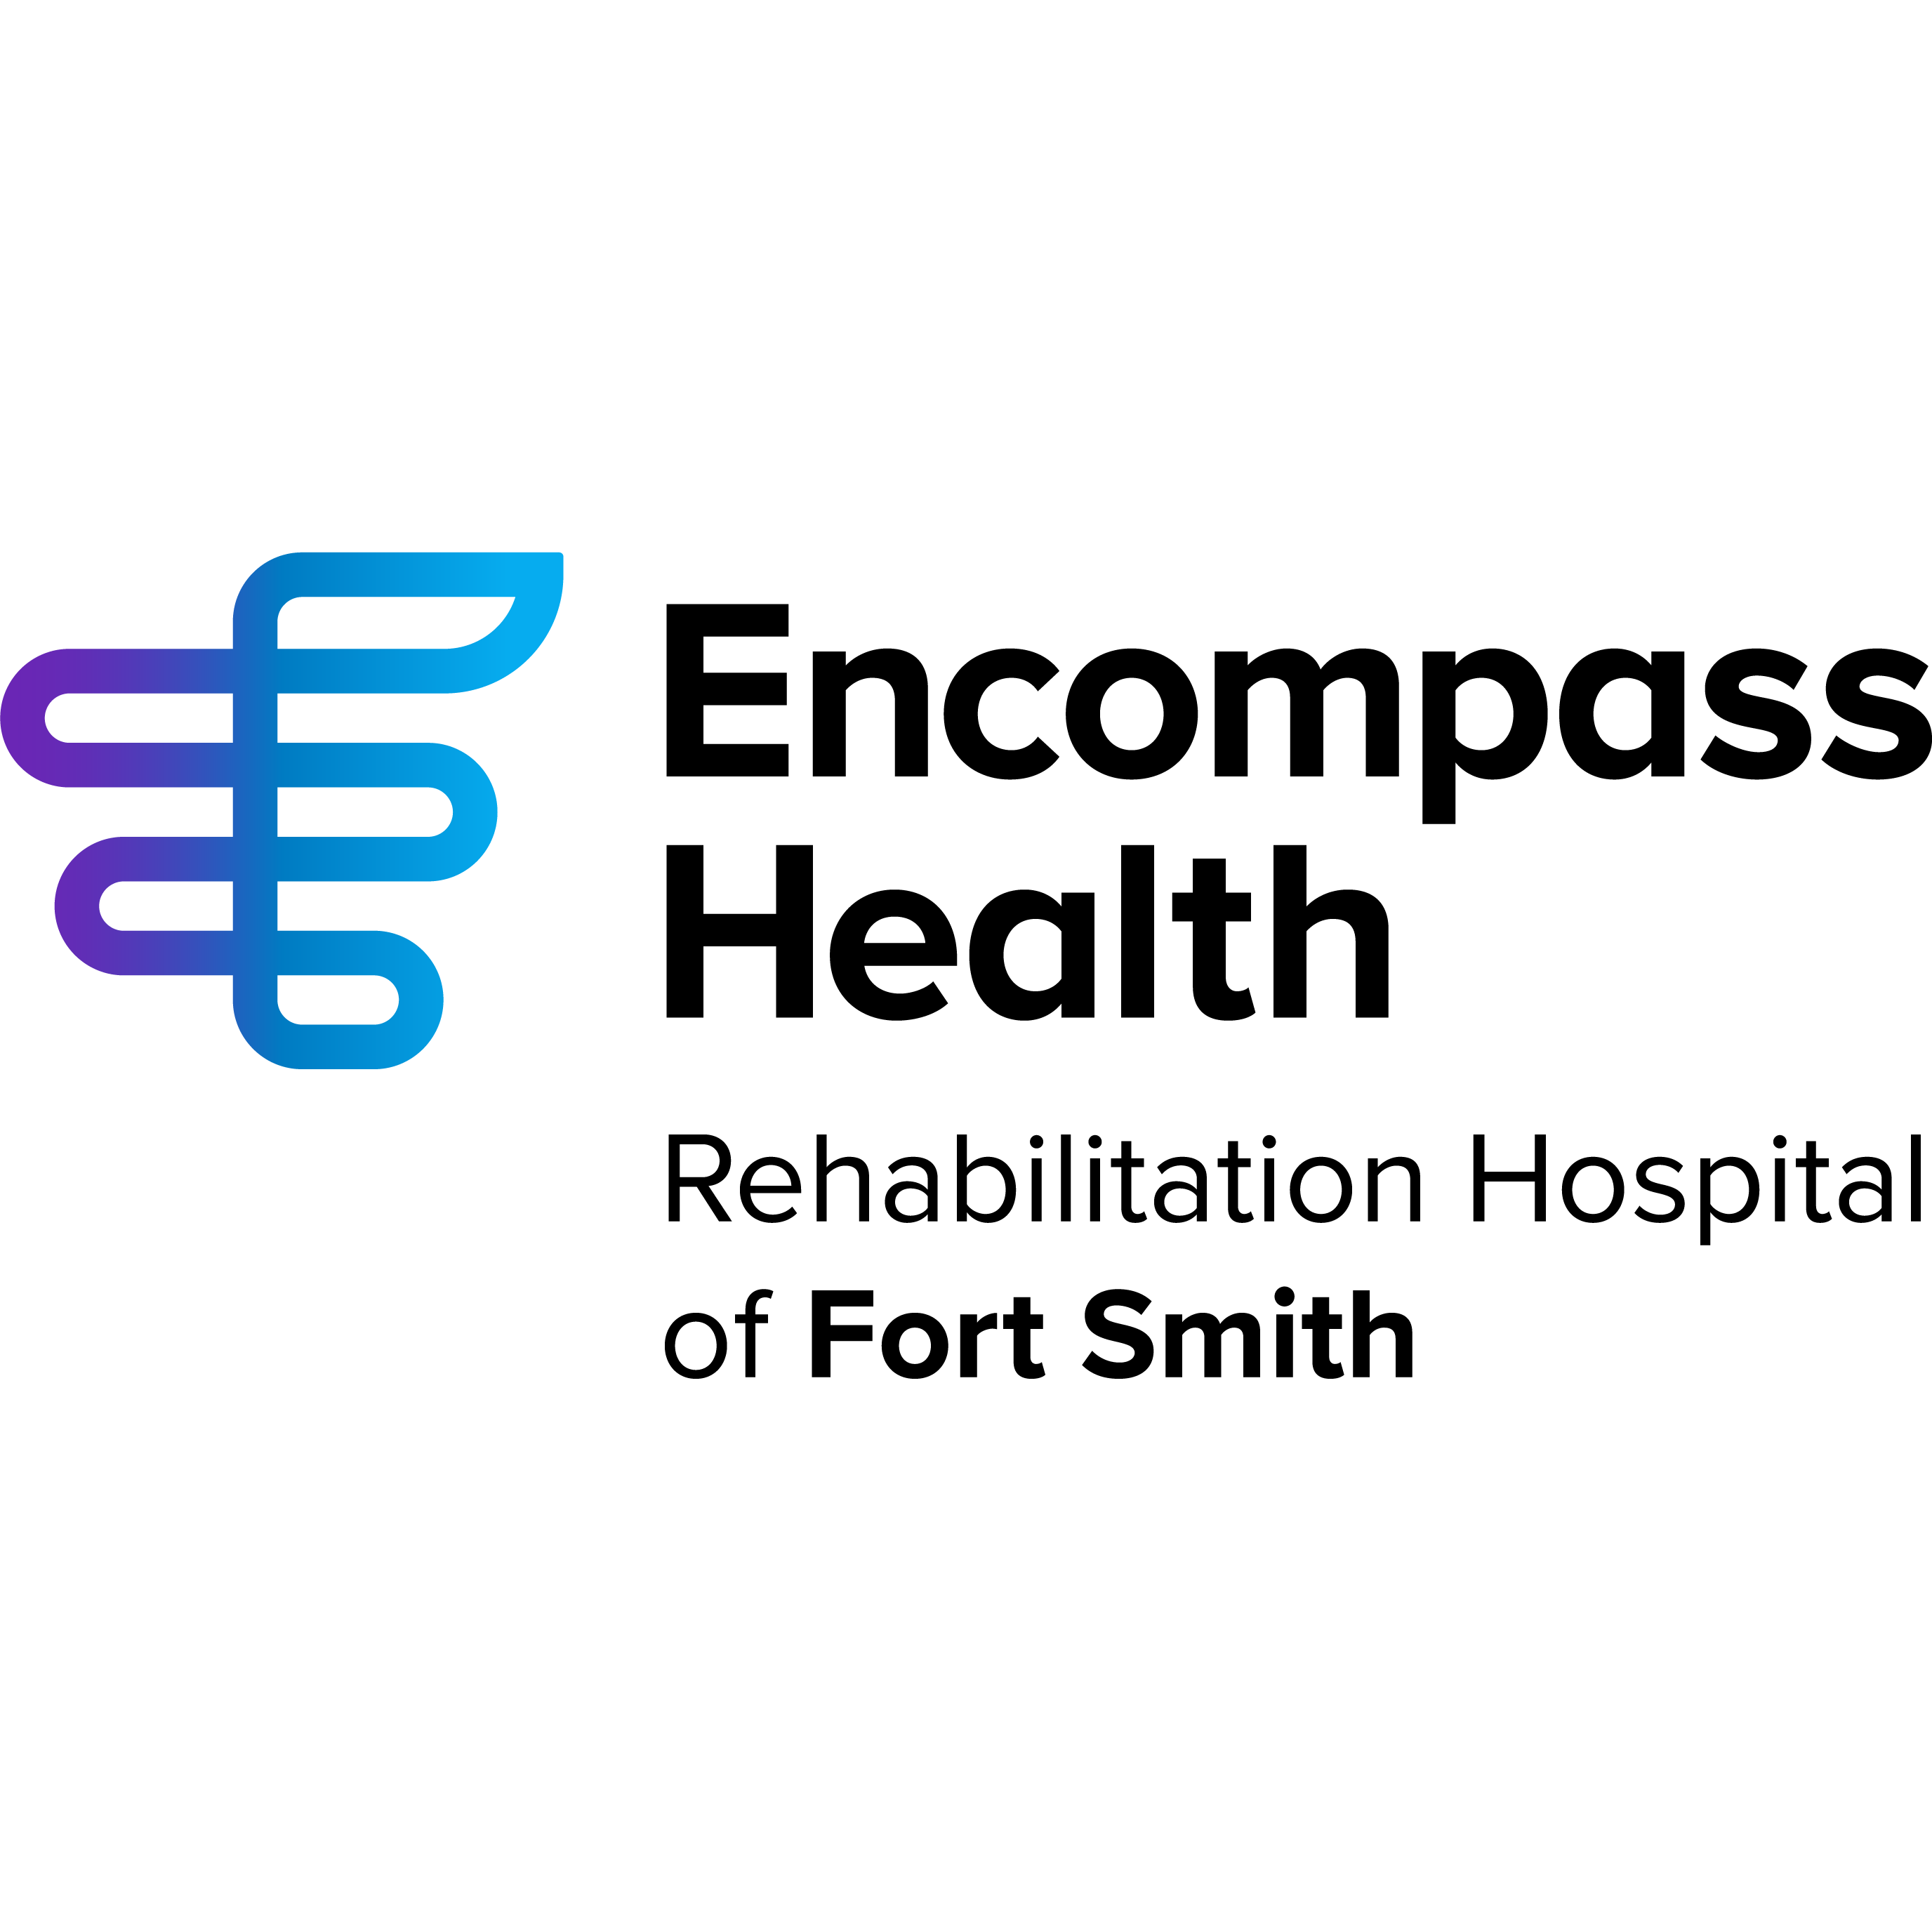 Encompass Health Rehabilitation Hospital of Fort Smith - Fort Smith, AR 72901 - (479)785-3300 | ShowMeLocal.com